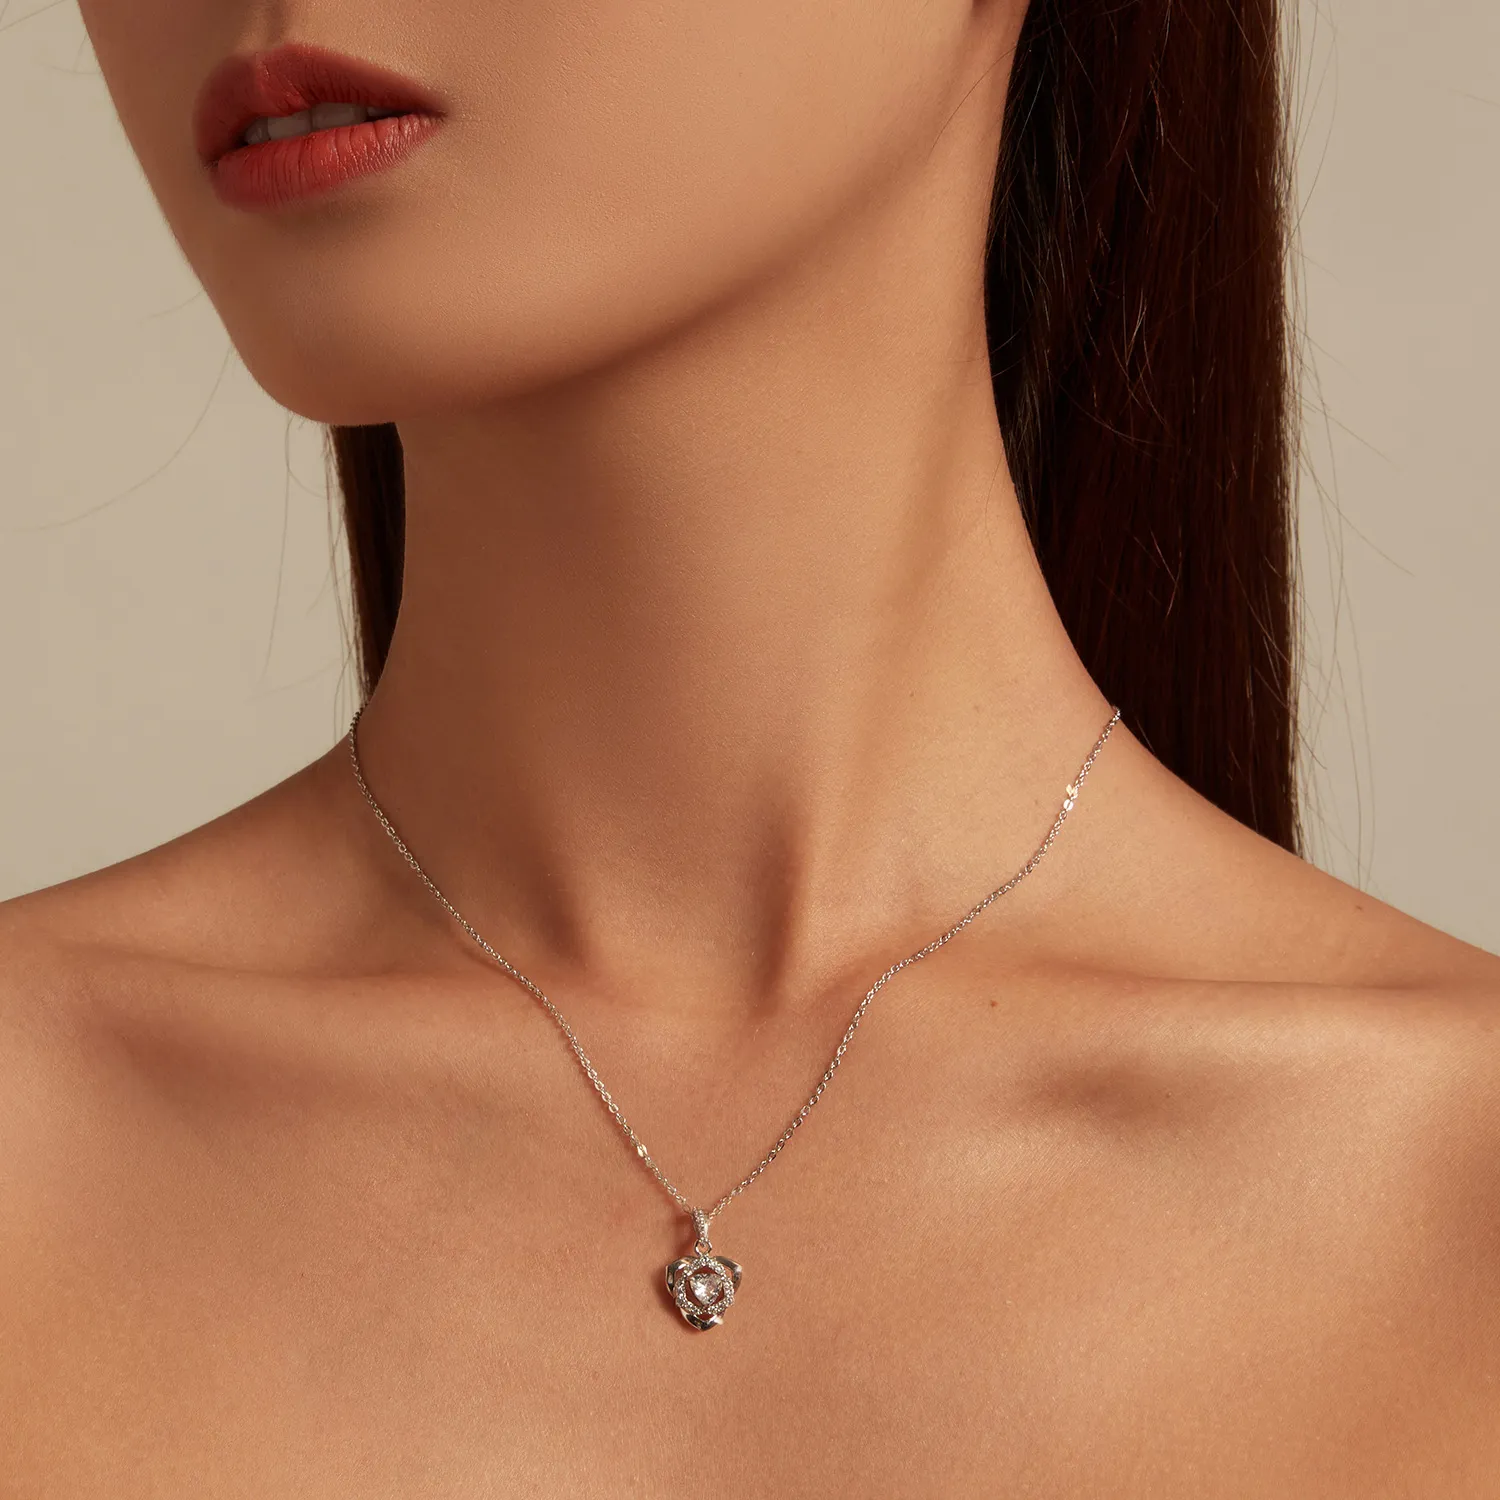 Women's Necklace Pandora Style - BSN299